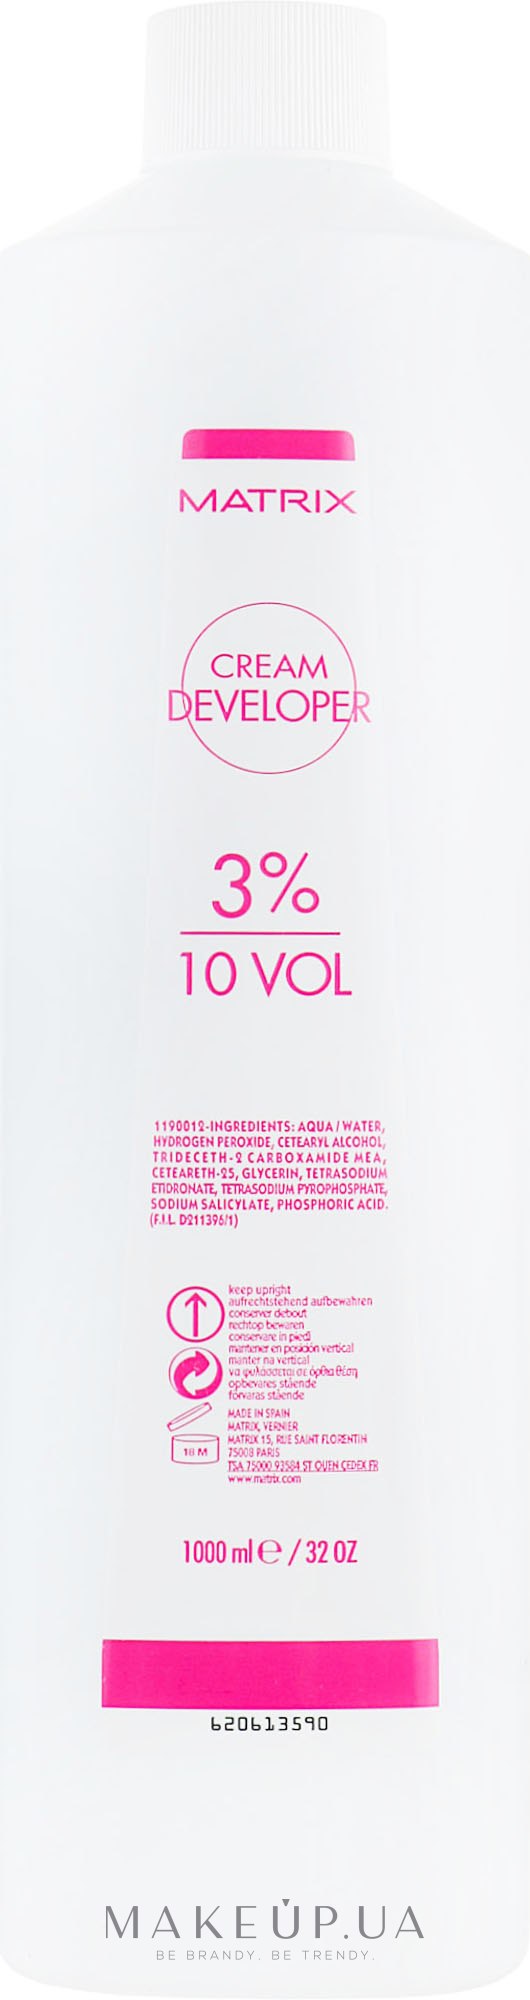 Крем-оксидант - Matrix Cream Developer 10 Vol. 3 %  — фото 1000ml